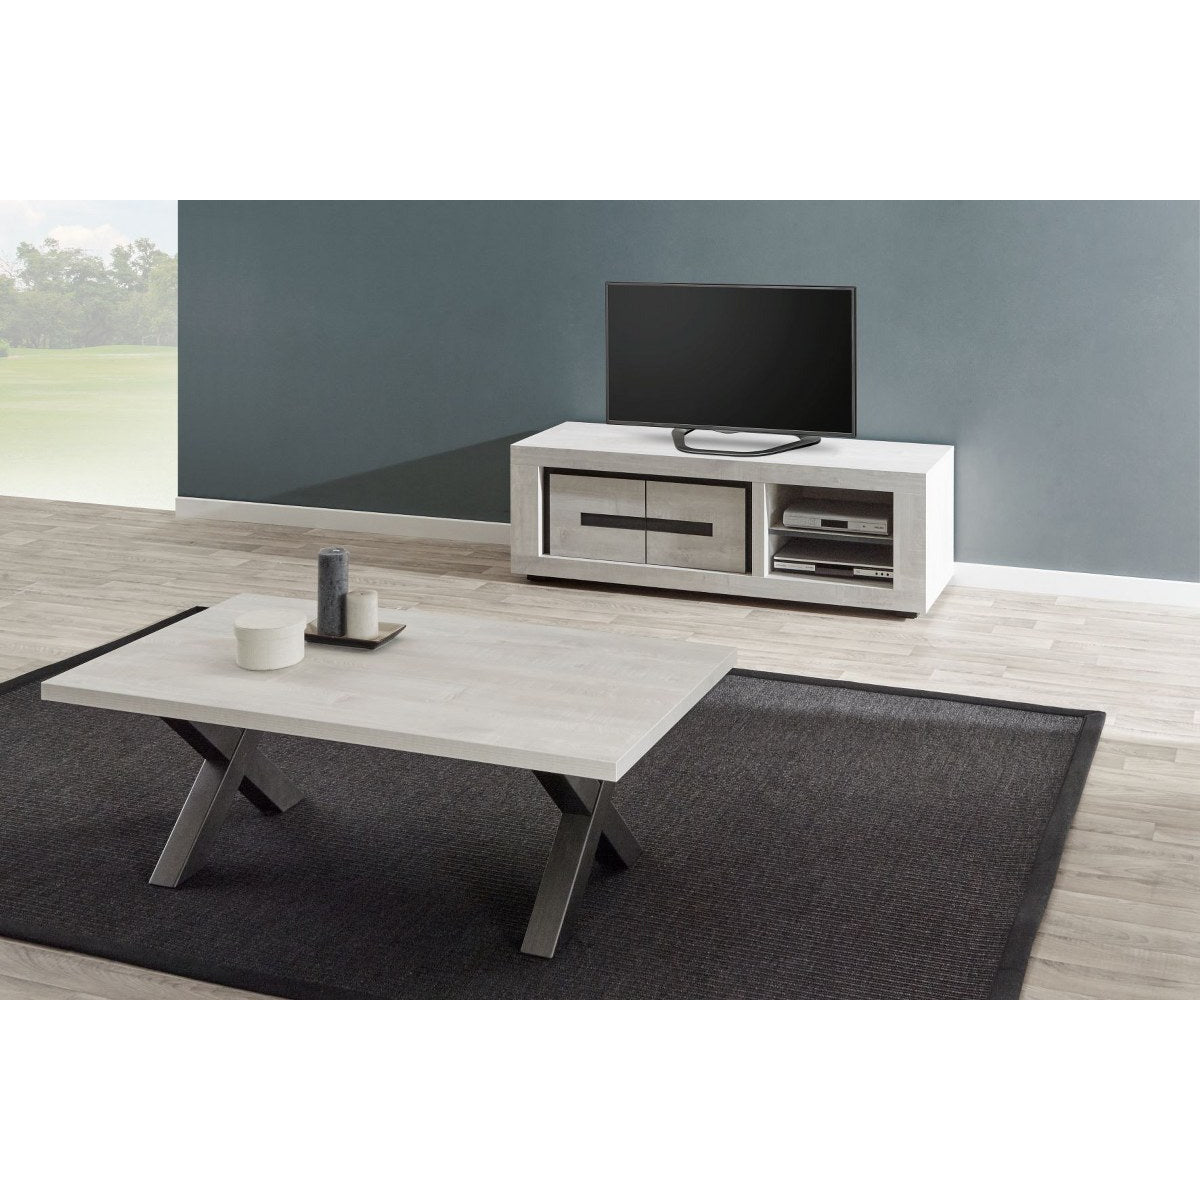 Dresser | Furniture series Vento | light gray, natural | 225x